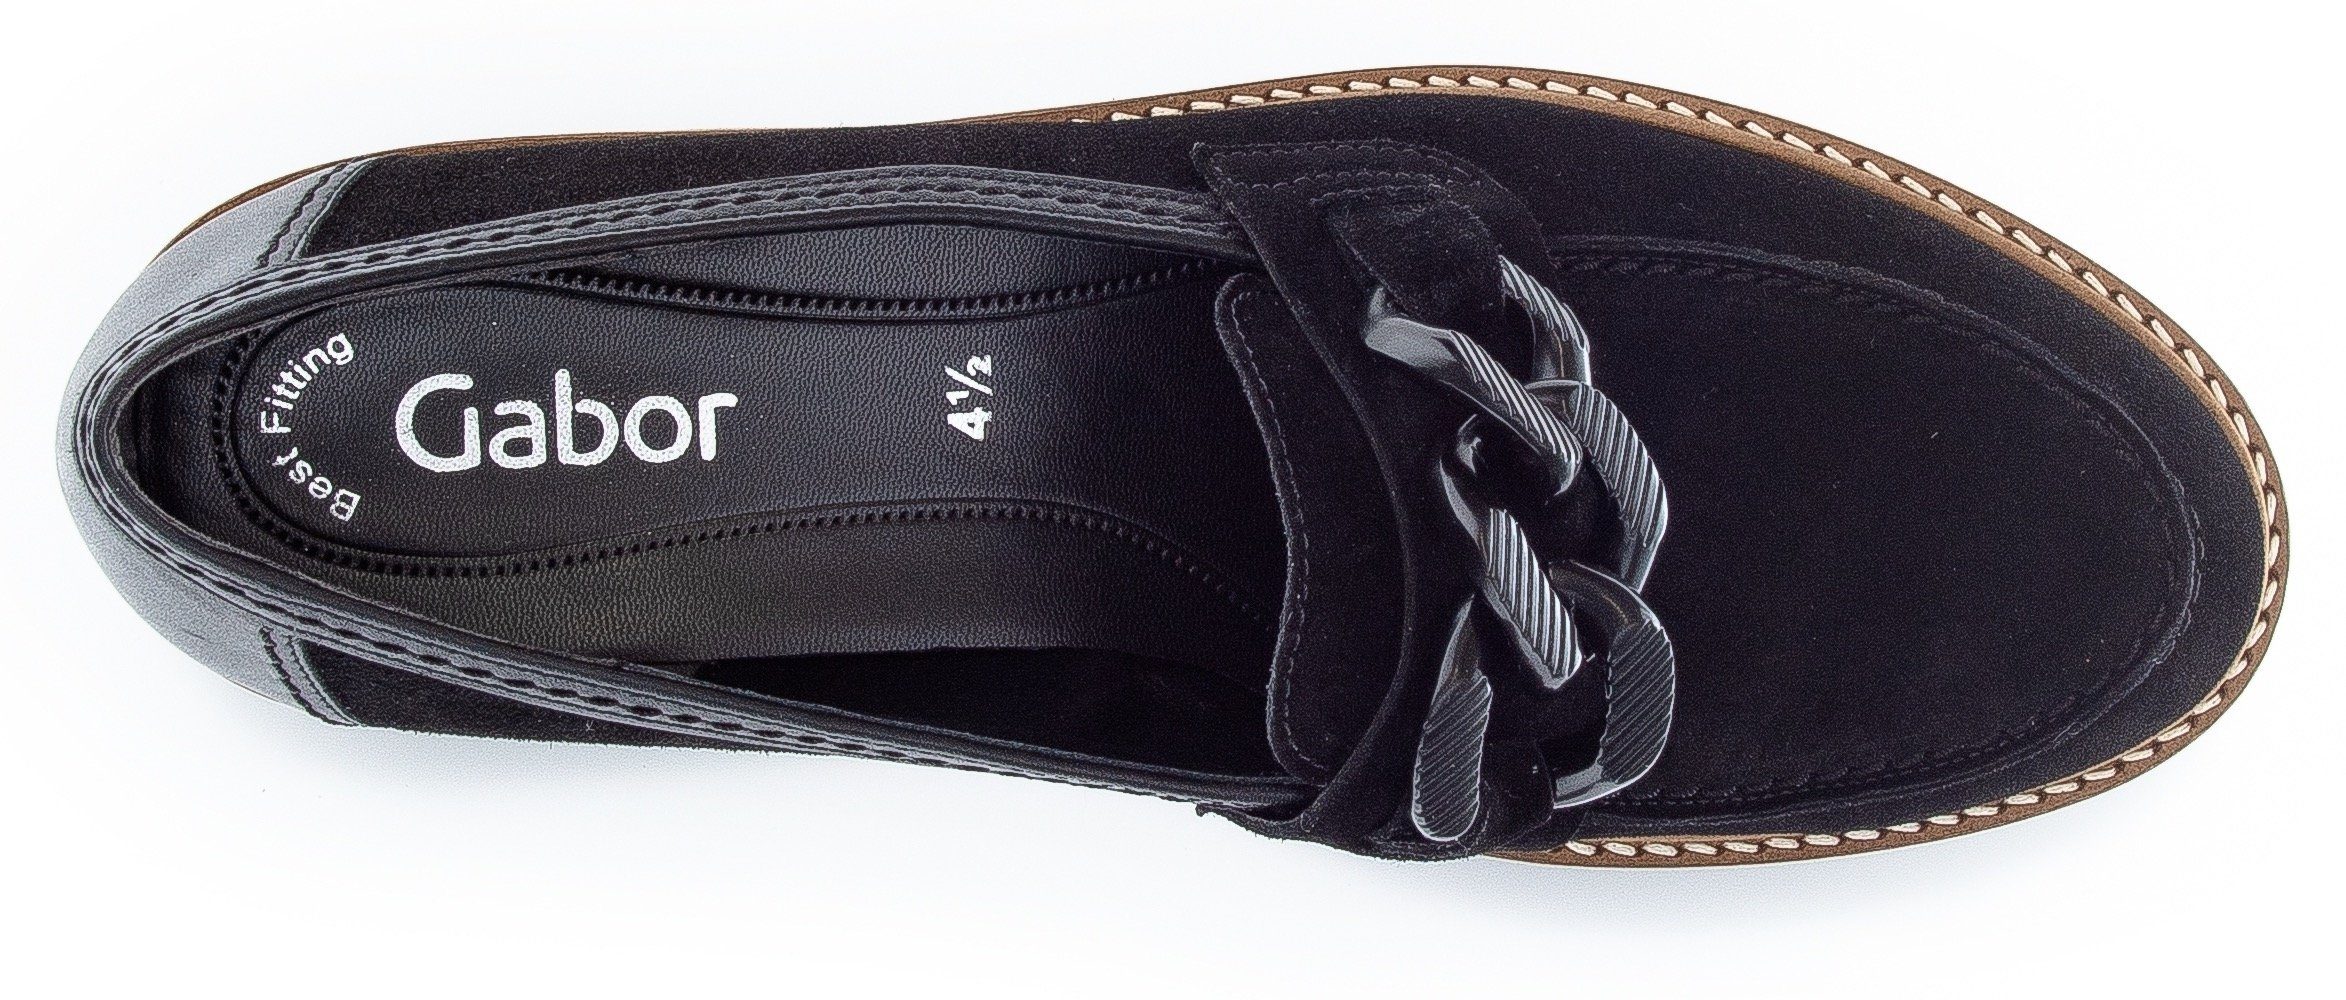 Slipper Gabor mit Leder-Innensohle schwarz hochwertiger